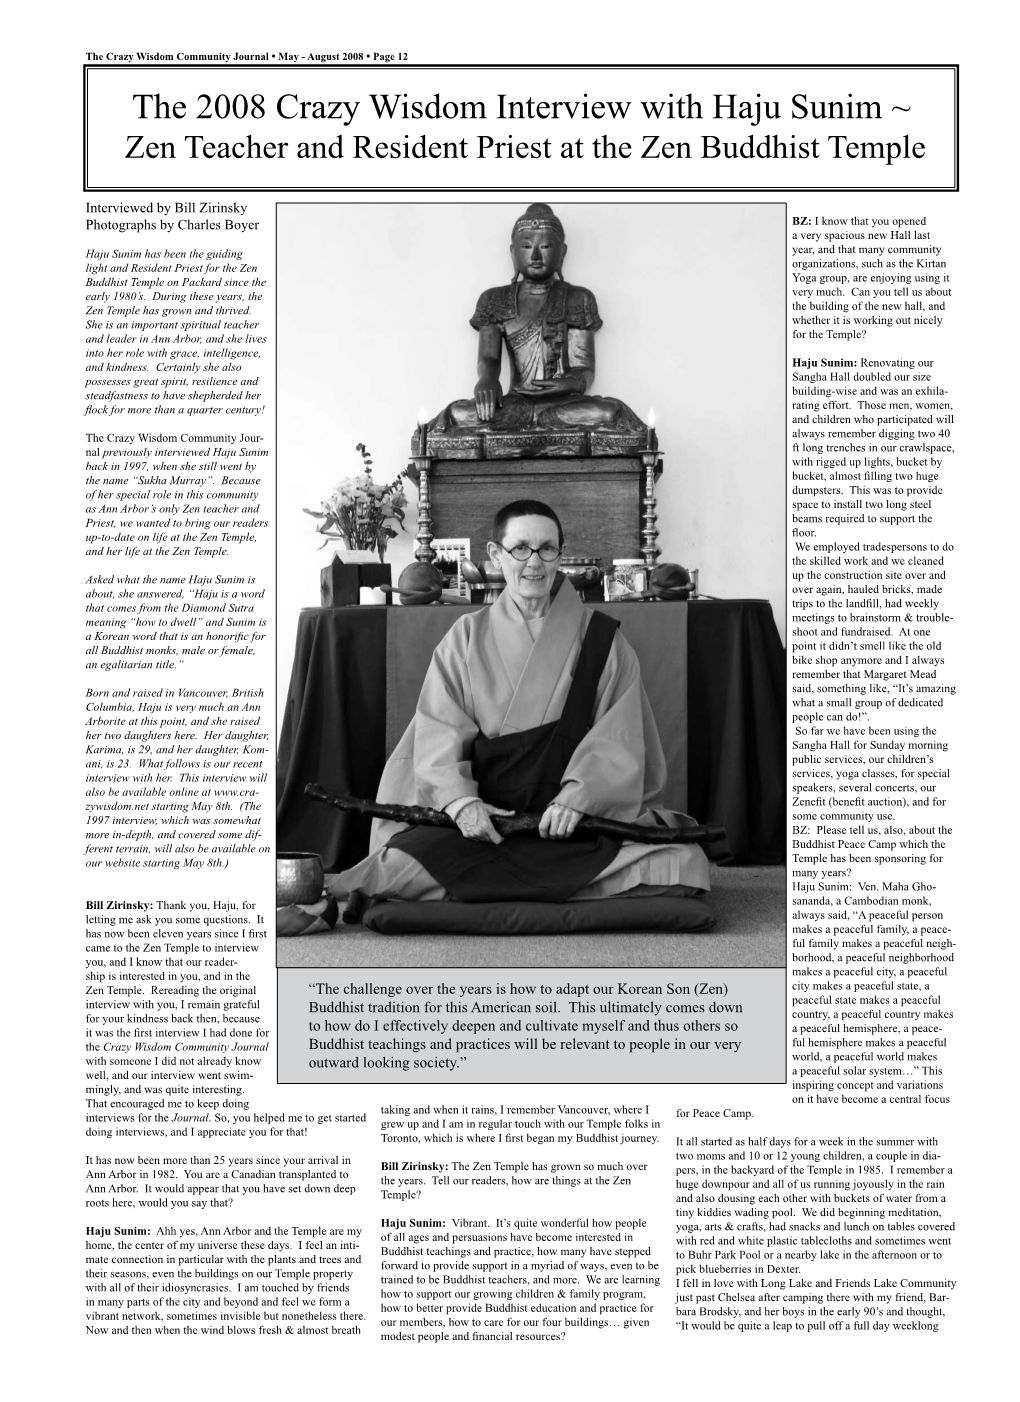 The 2008 Crazy Wisdom Interview with Haju Sunim ~ Zen Teacher and Resident Priest at the Zen Buddhist Temple